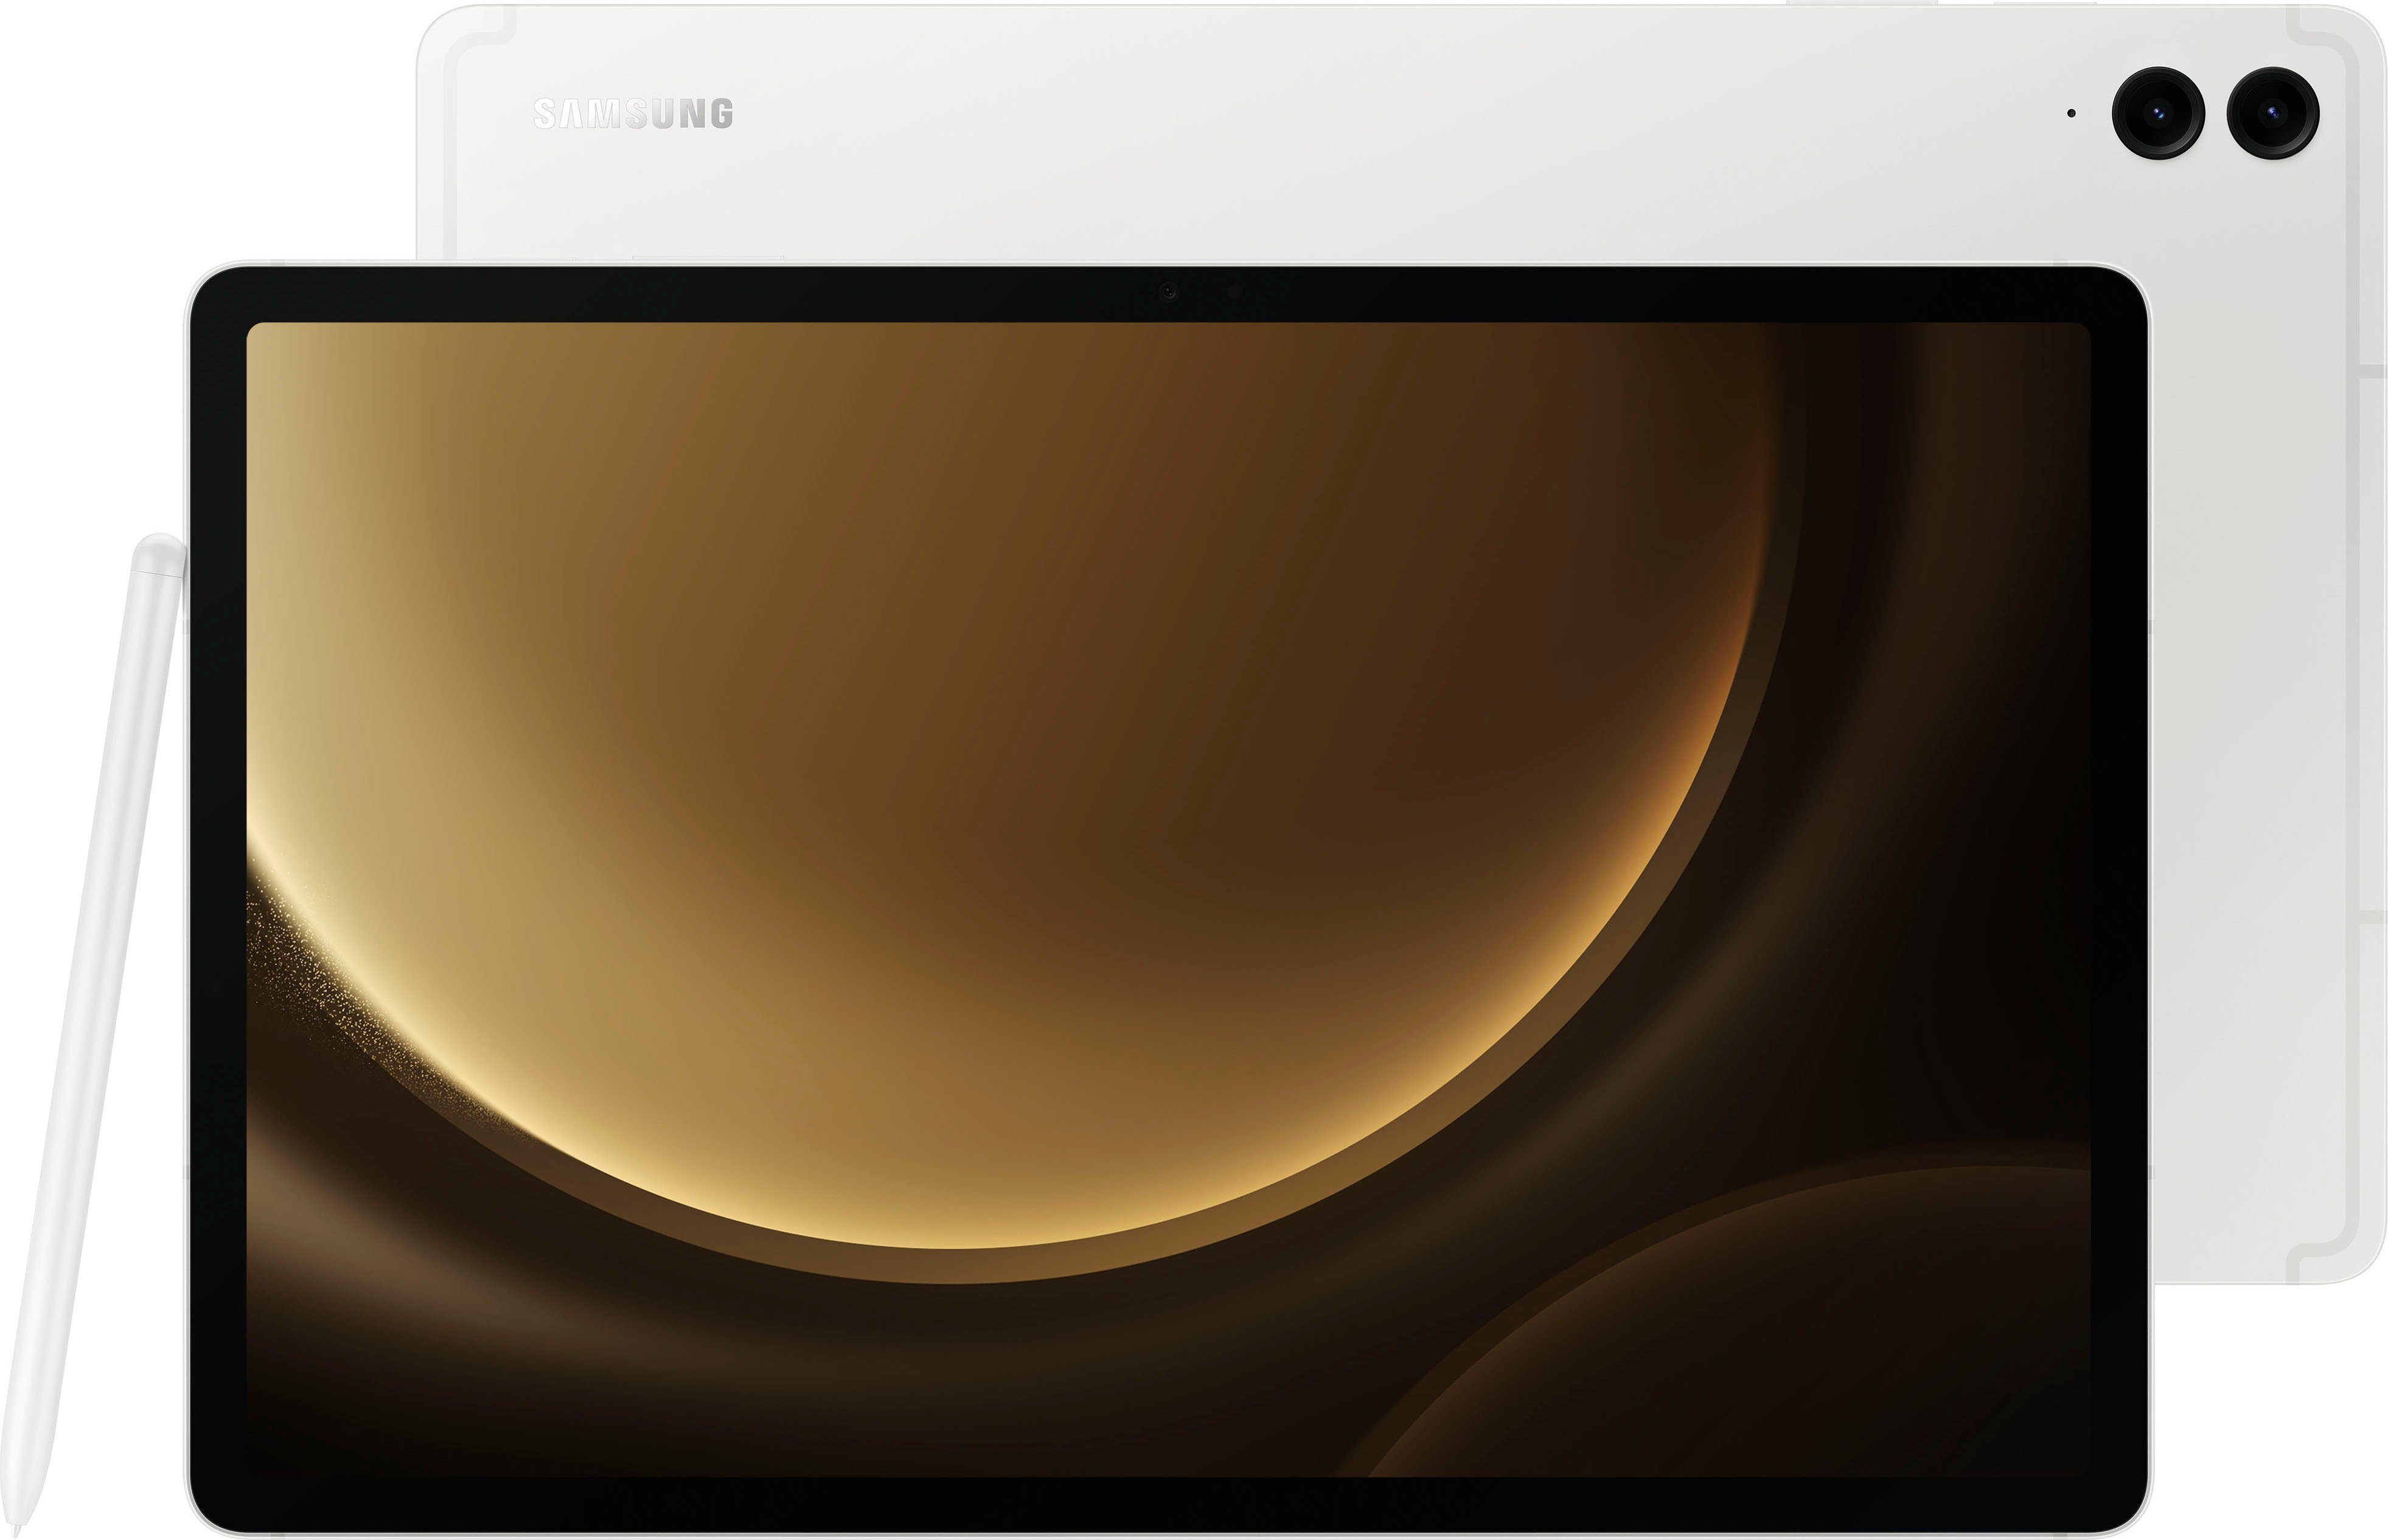 UI,Knox) Galaxy Android,One Tab GB, FE+ (12,4", Samsung Tablet silver S9 128